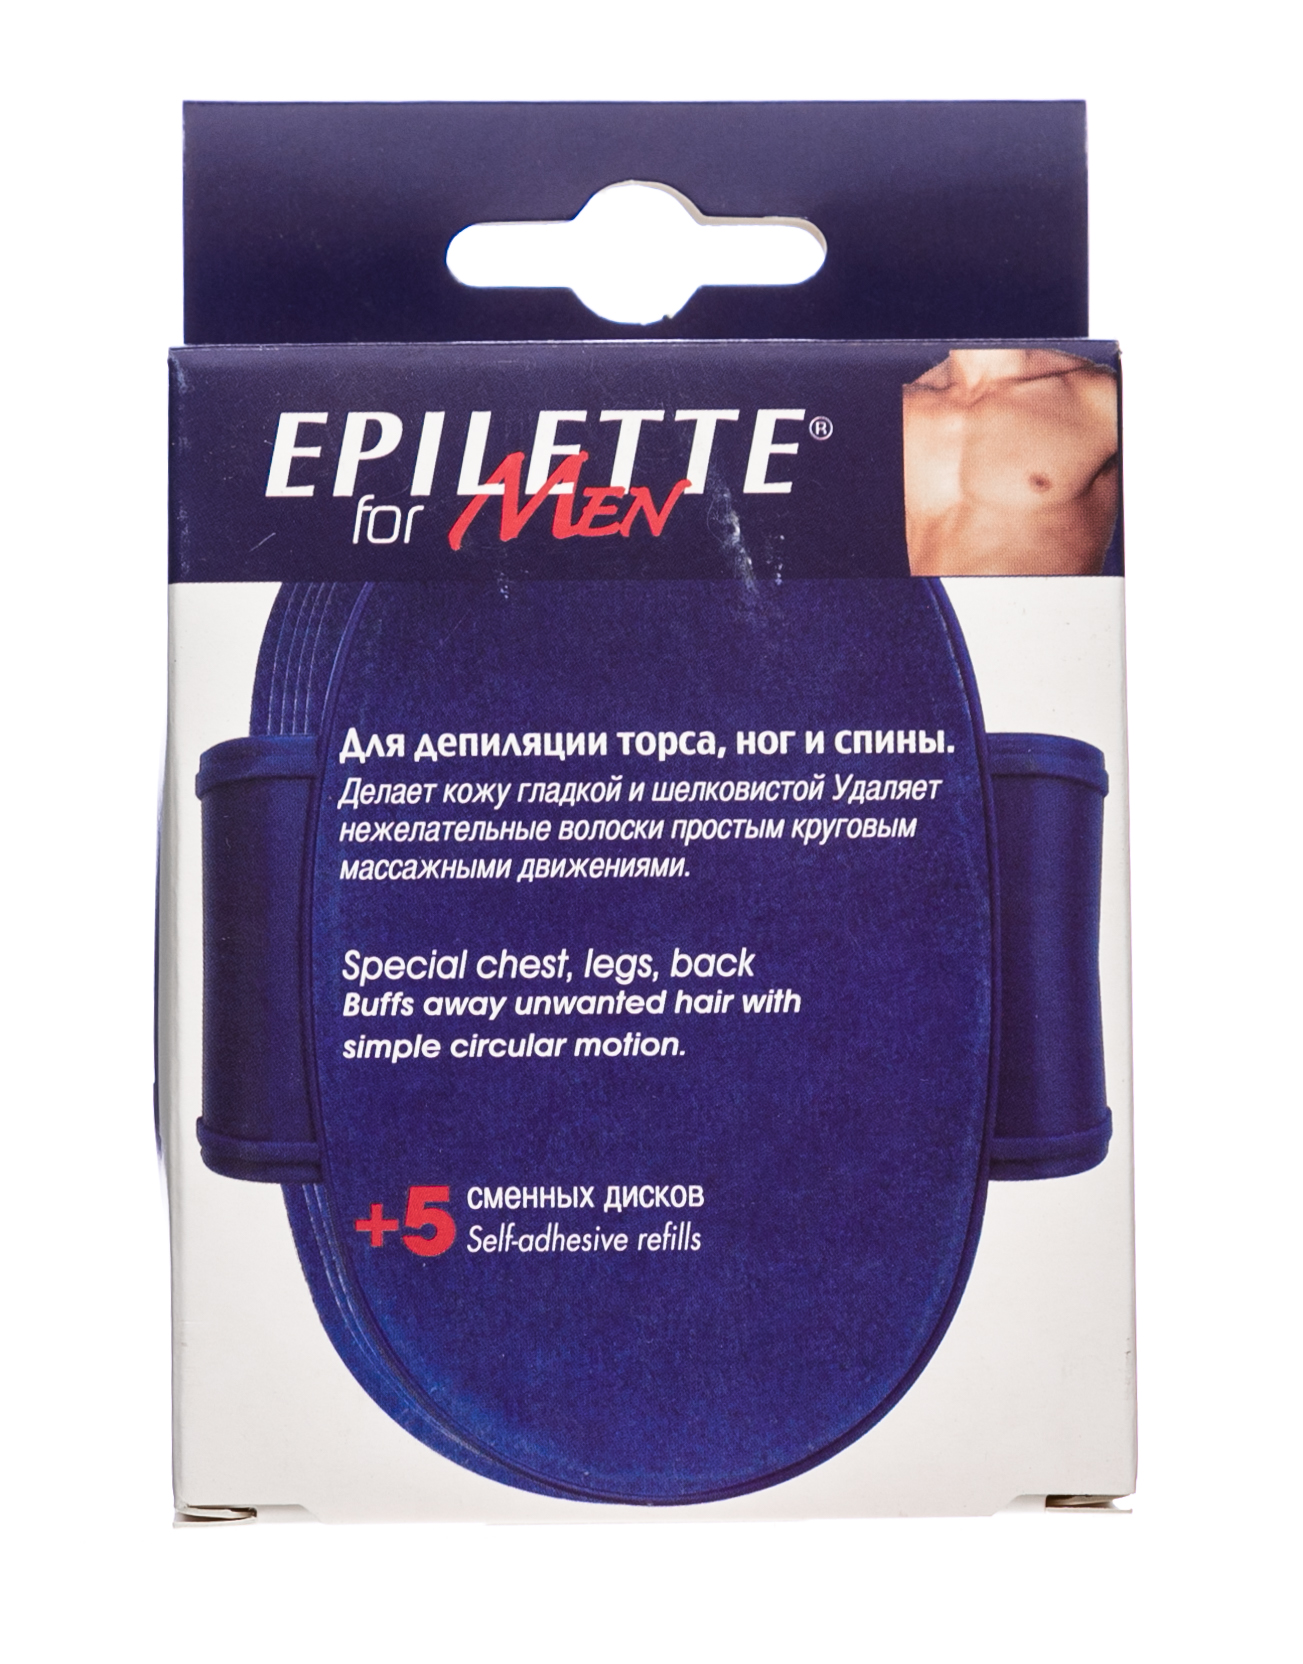 Epilette Подушечка для депиляции у мужчин (Epilette, Facial buffer)